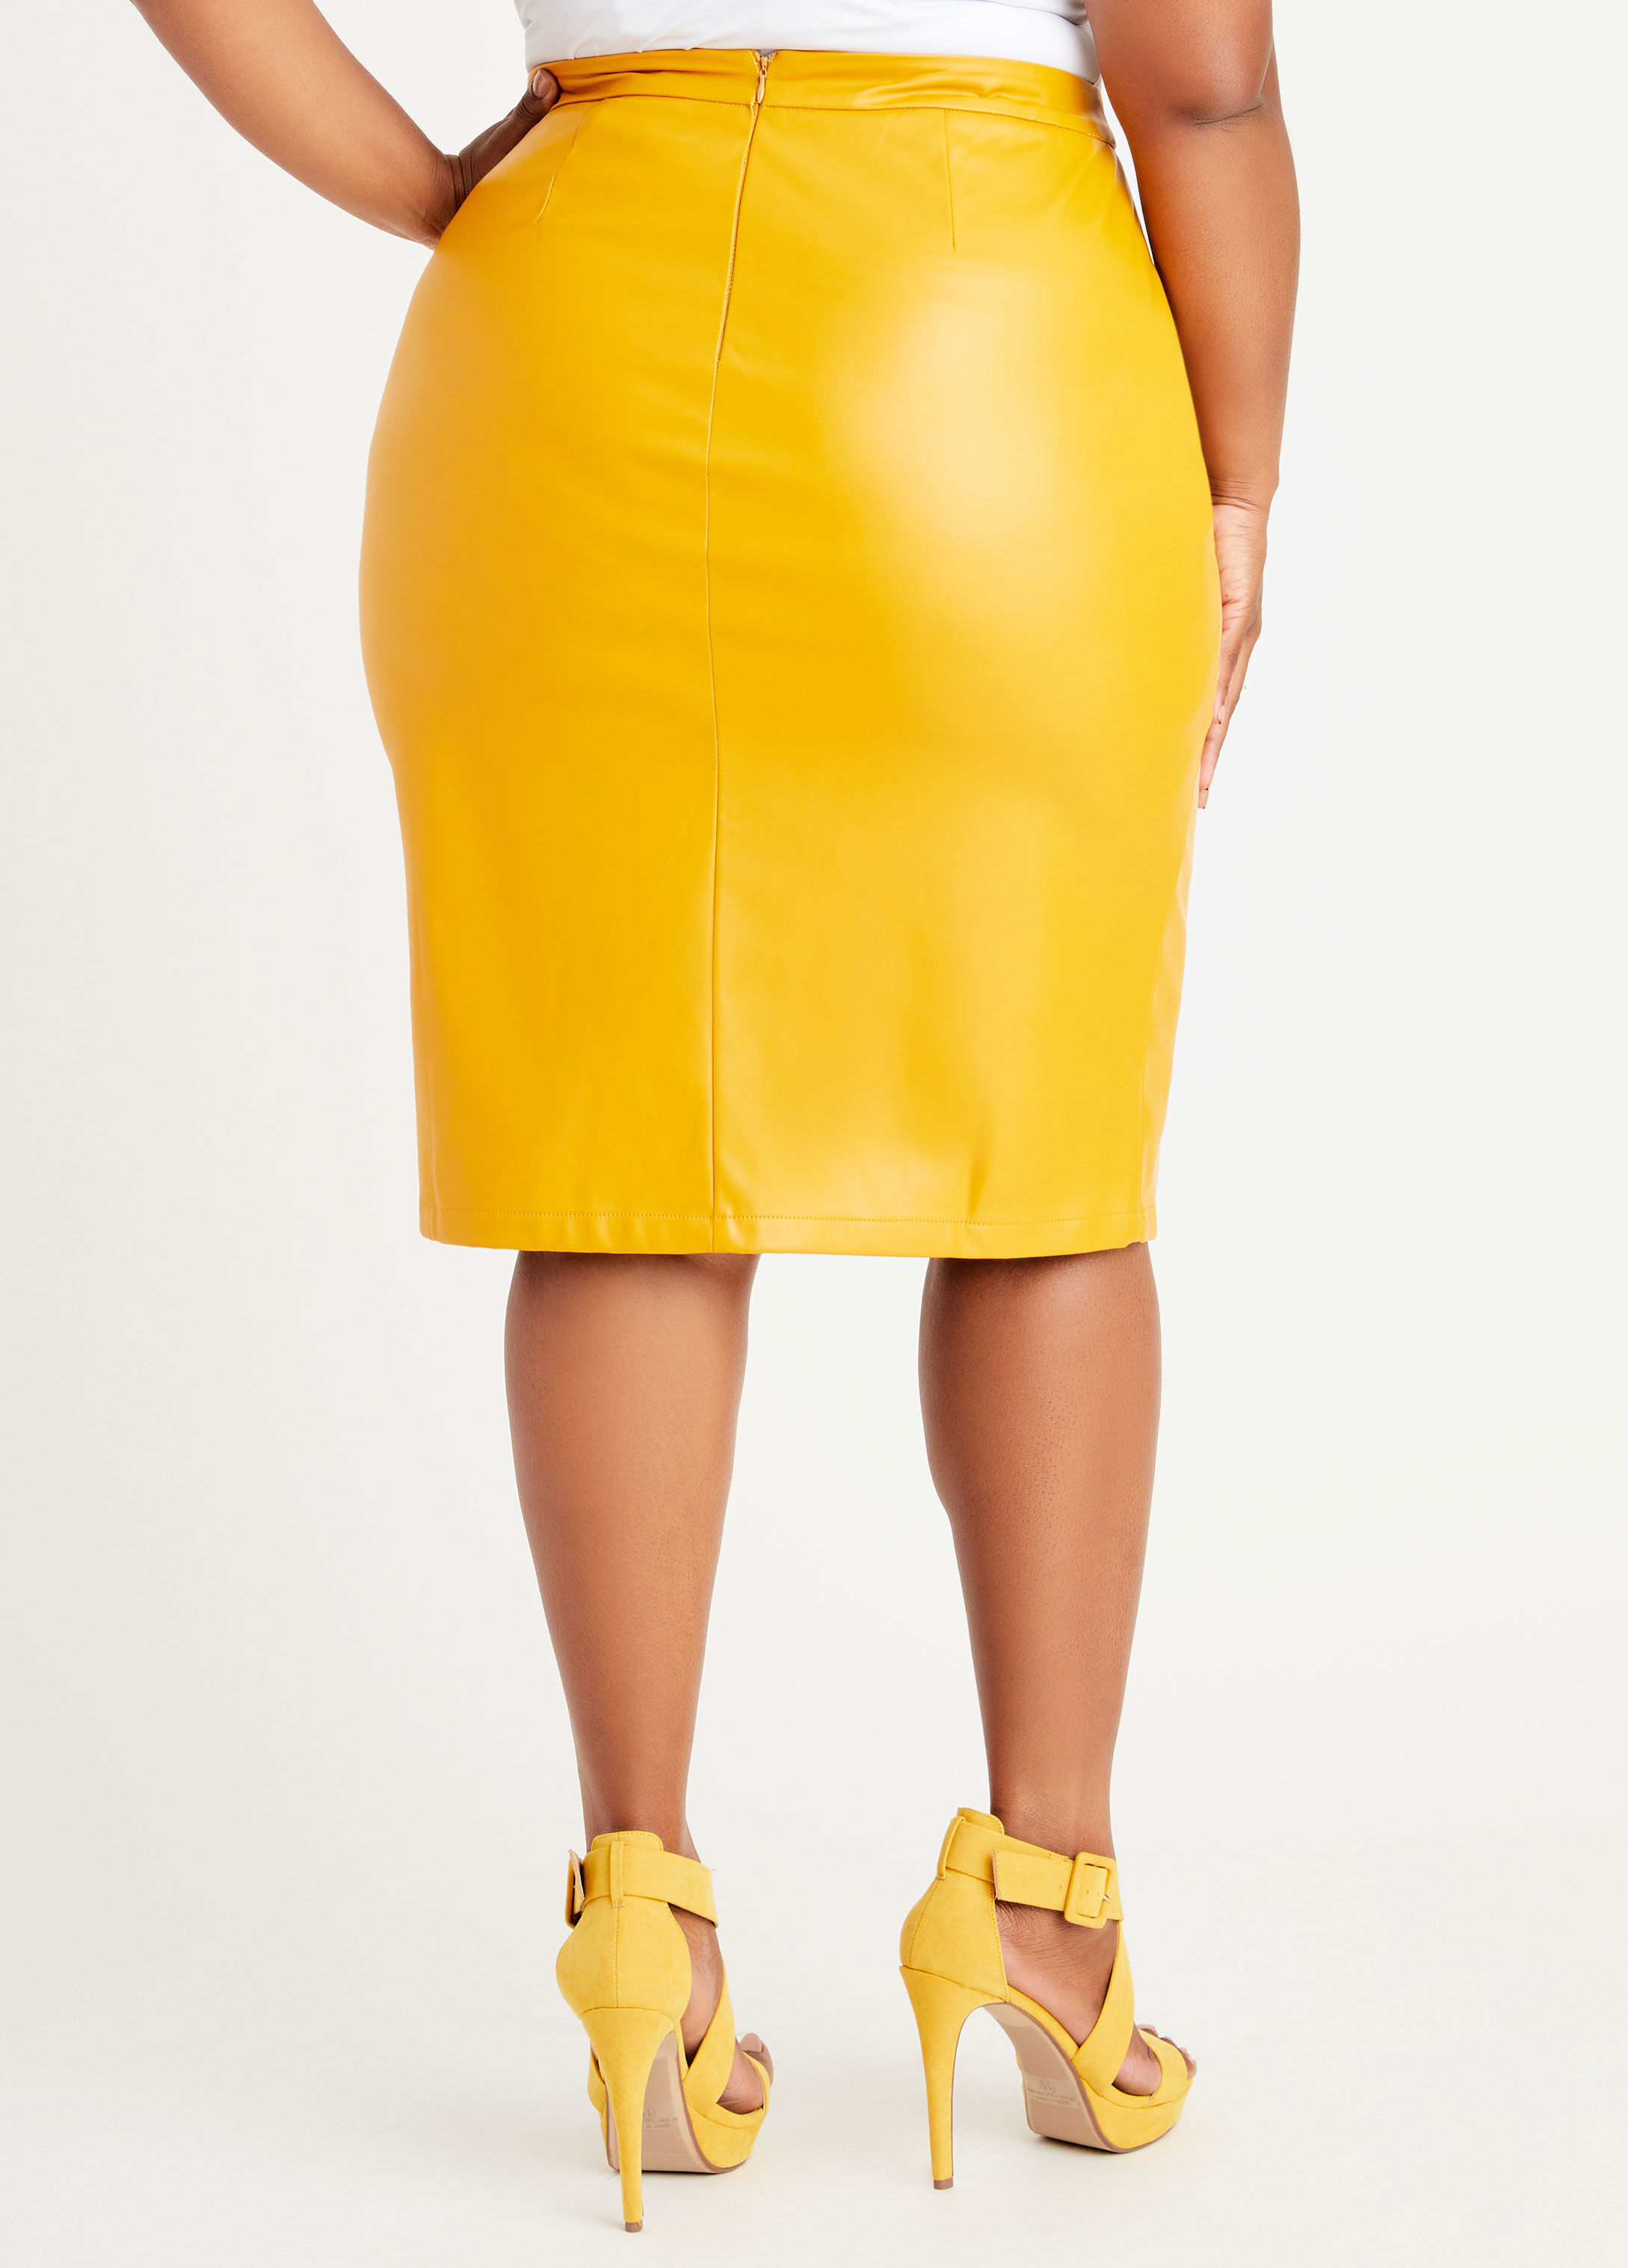 Plus Size Skirts, Sizes 10 - 36 | Ashley Stewart